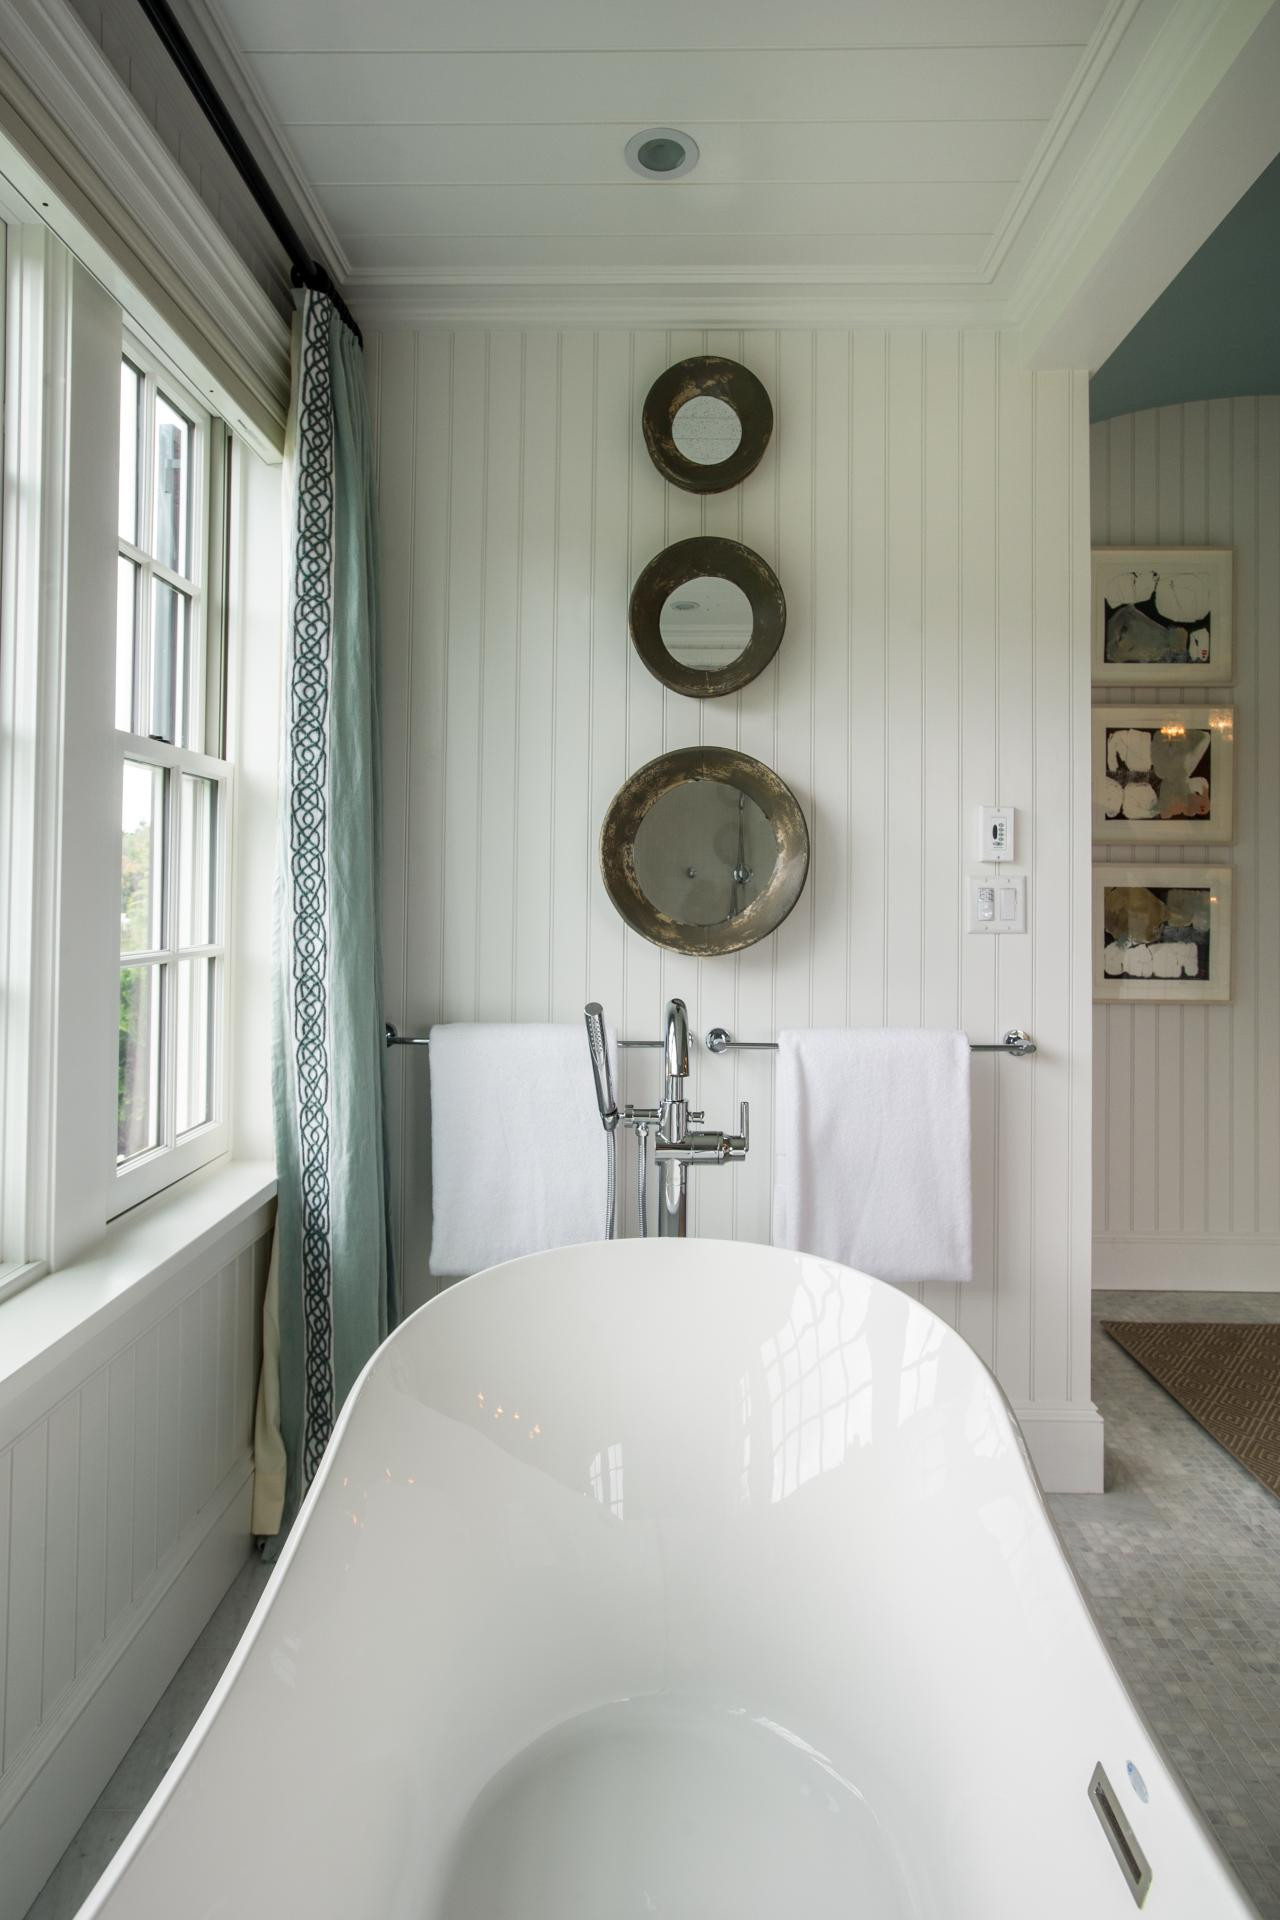 Master Bathroom Mirror Ideas
 10 Simple Decorating Ideas from the HGTV Dream Home